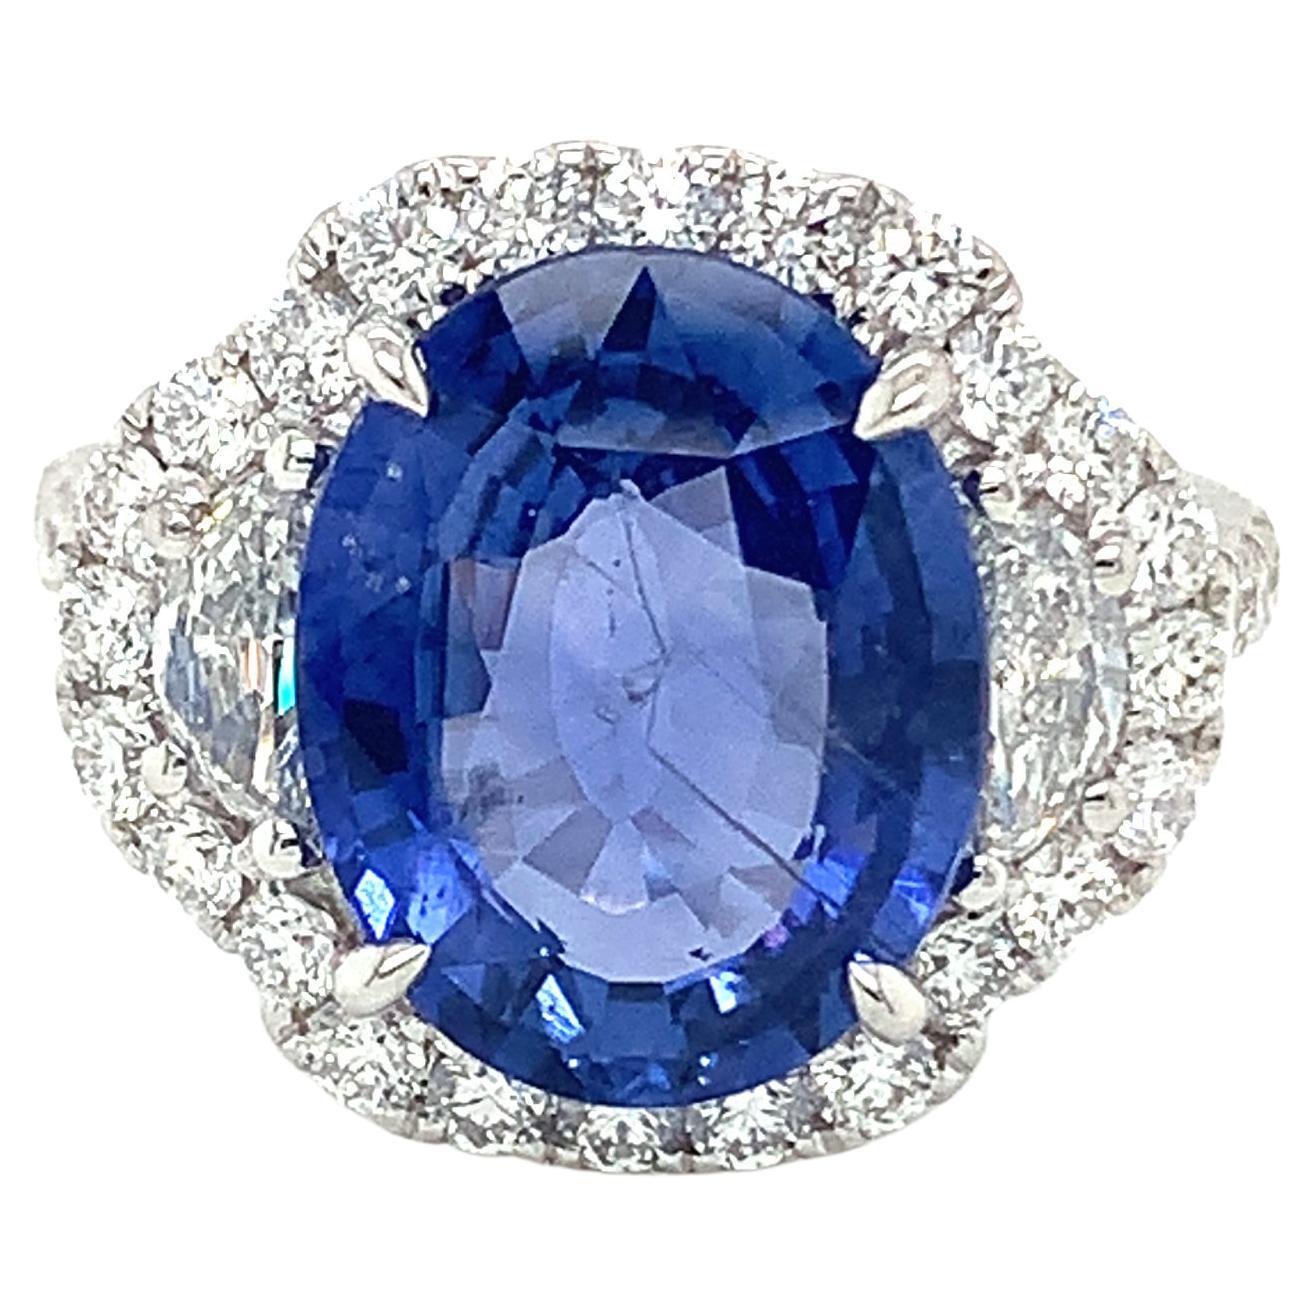 5.86 Carat Blue Sapphire & Diamond Ring in 18 Karat White Gold